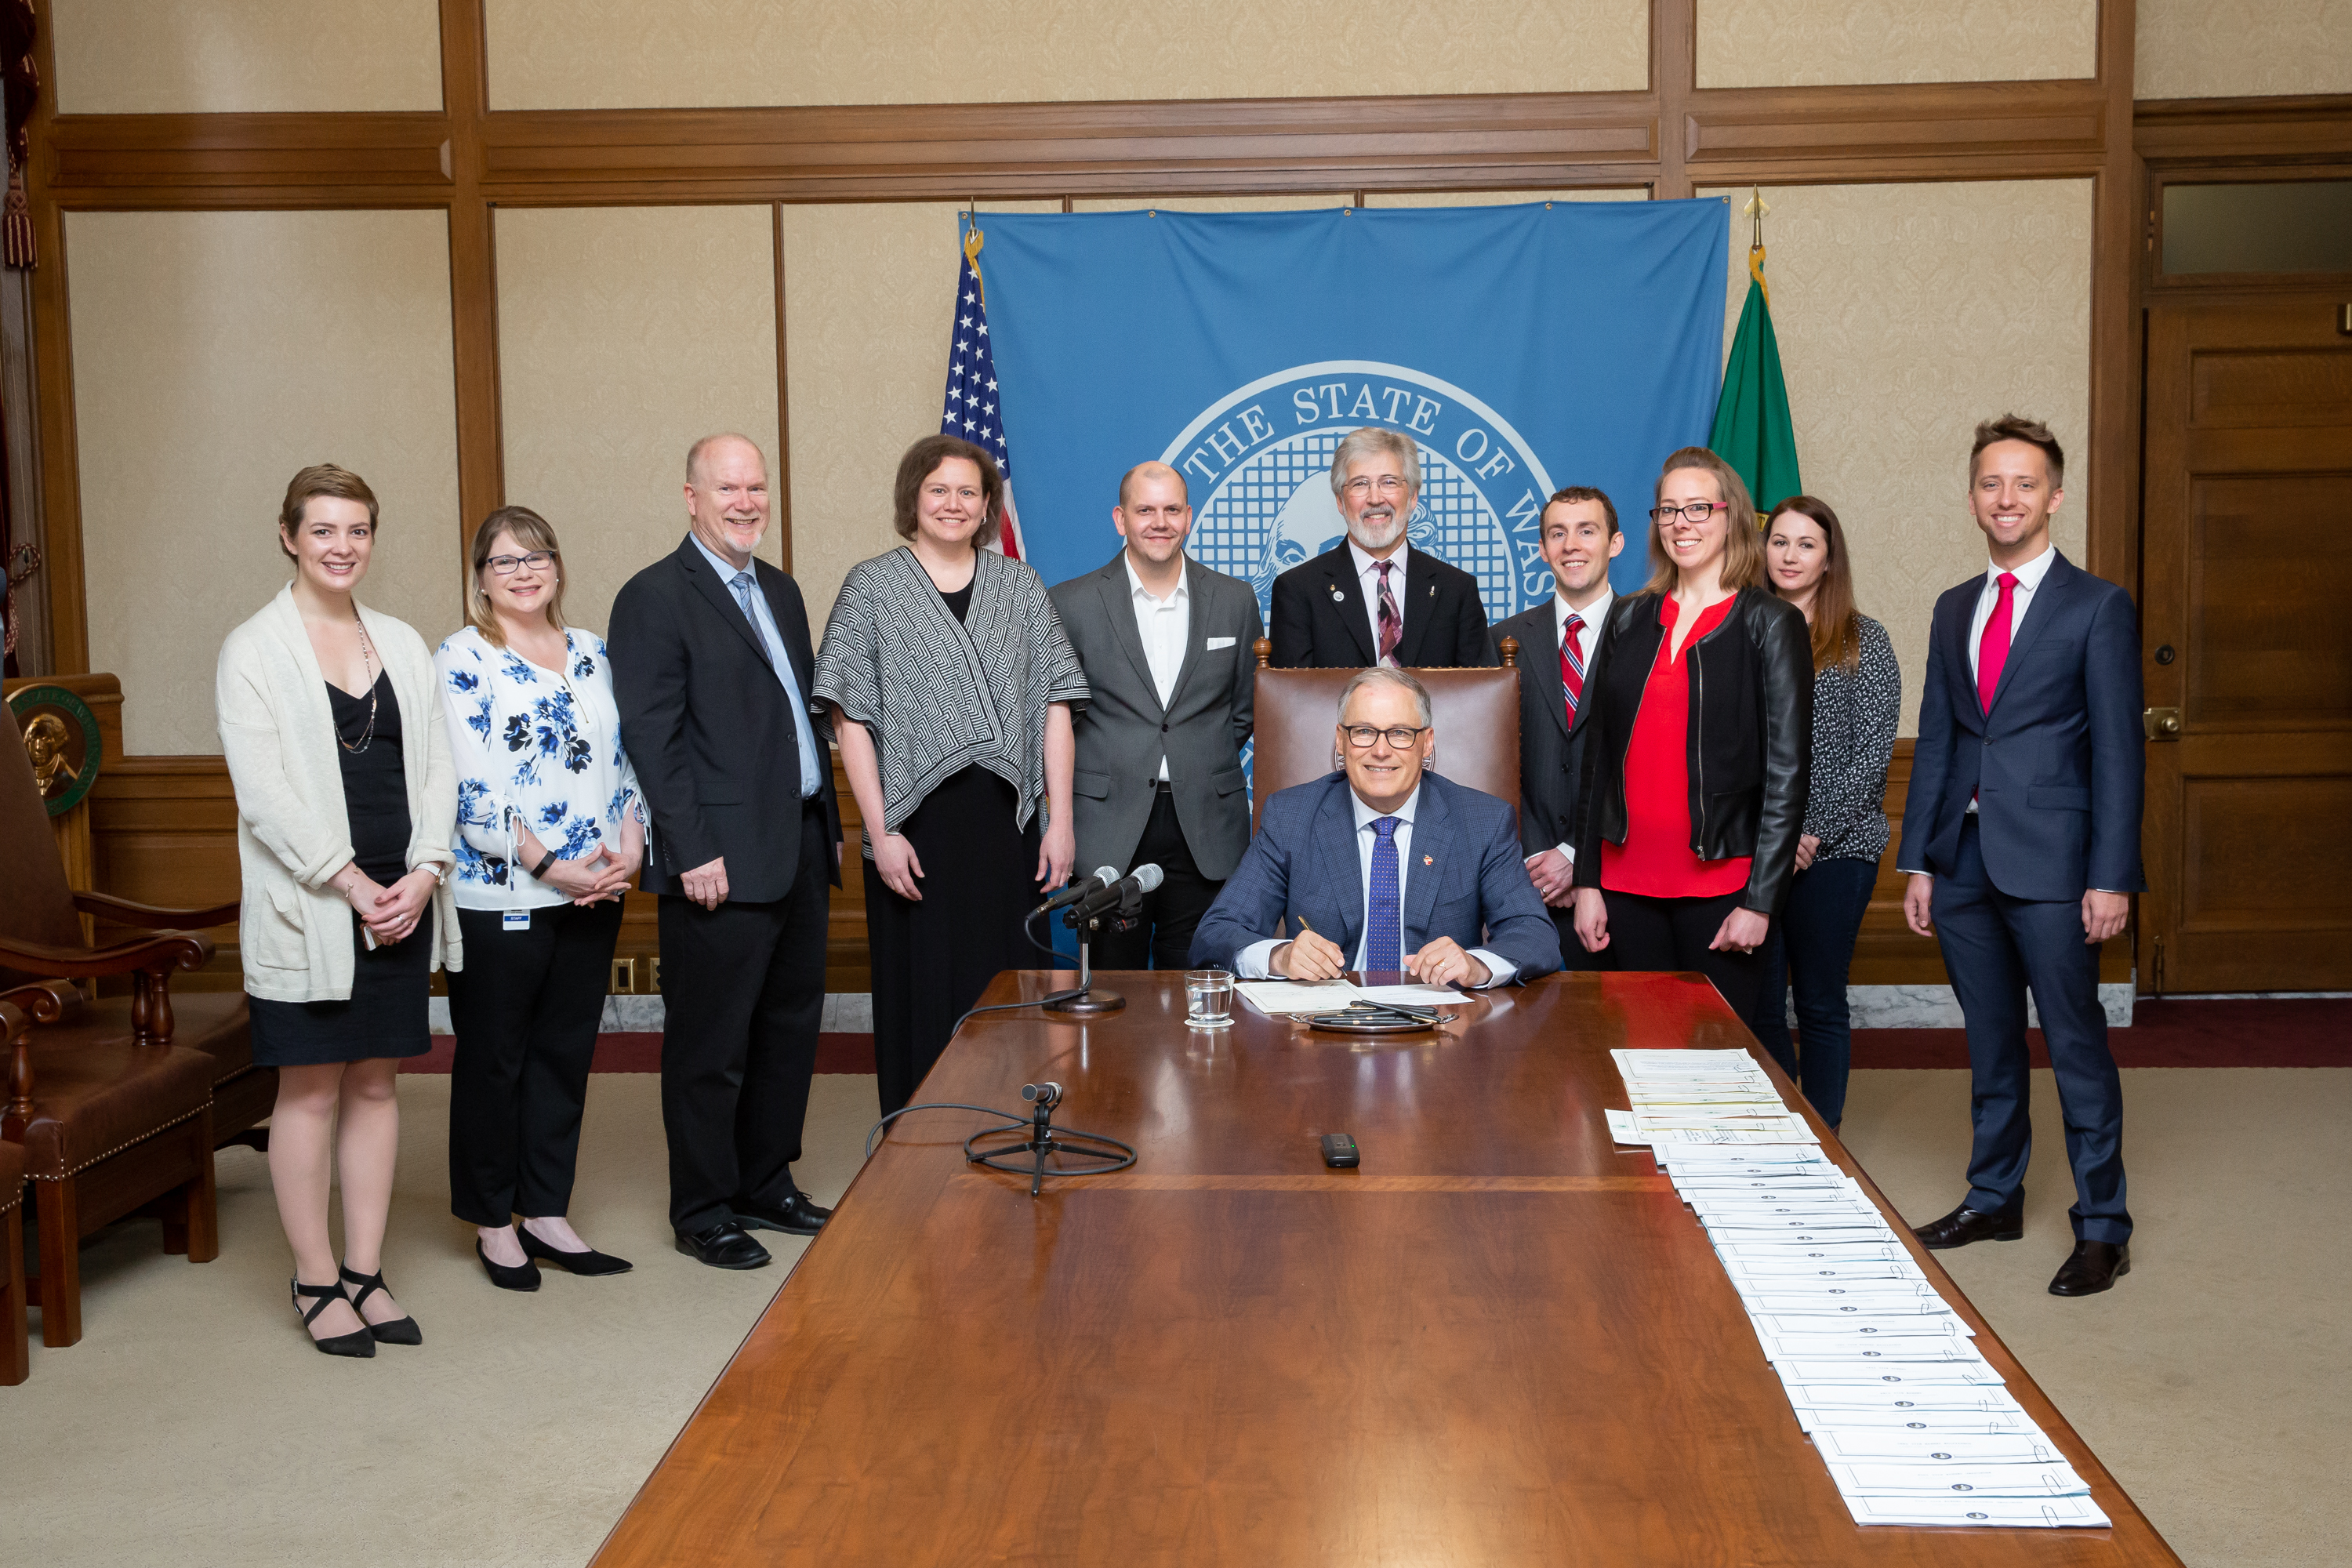 Governor Inslee signs AIA|WA legislation